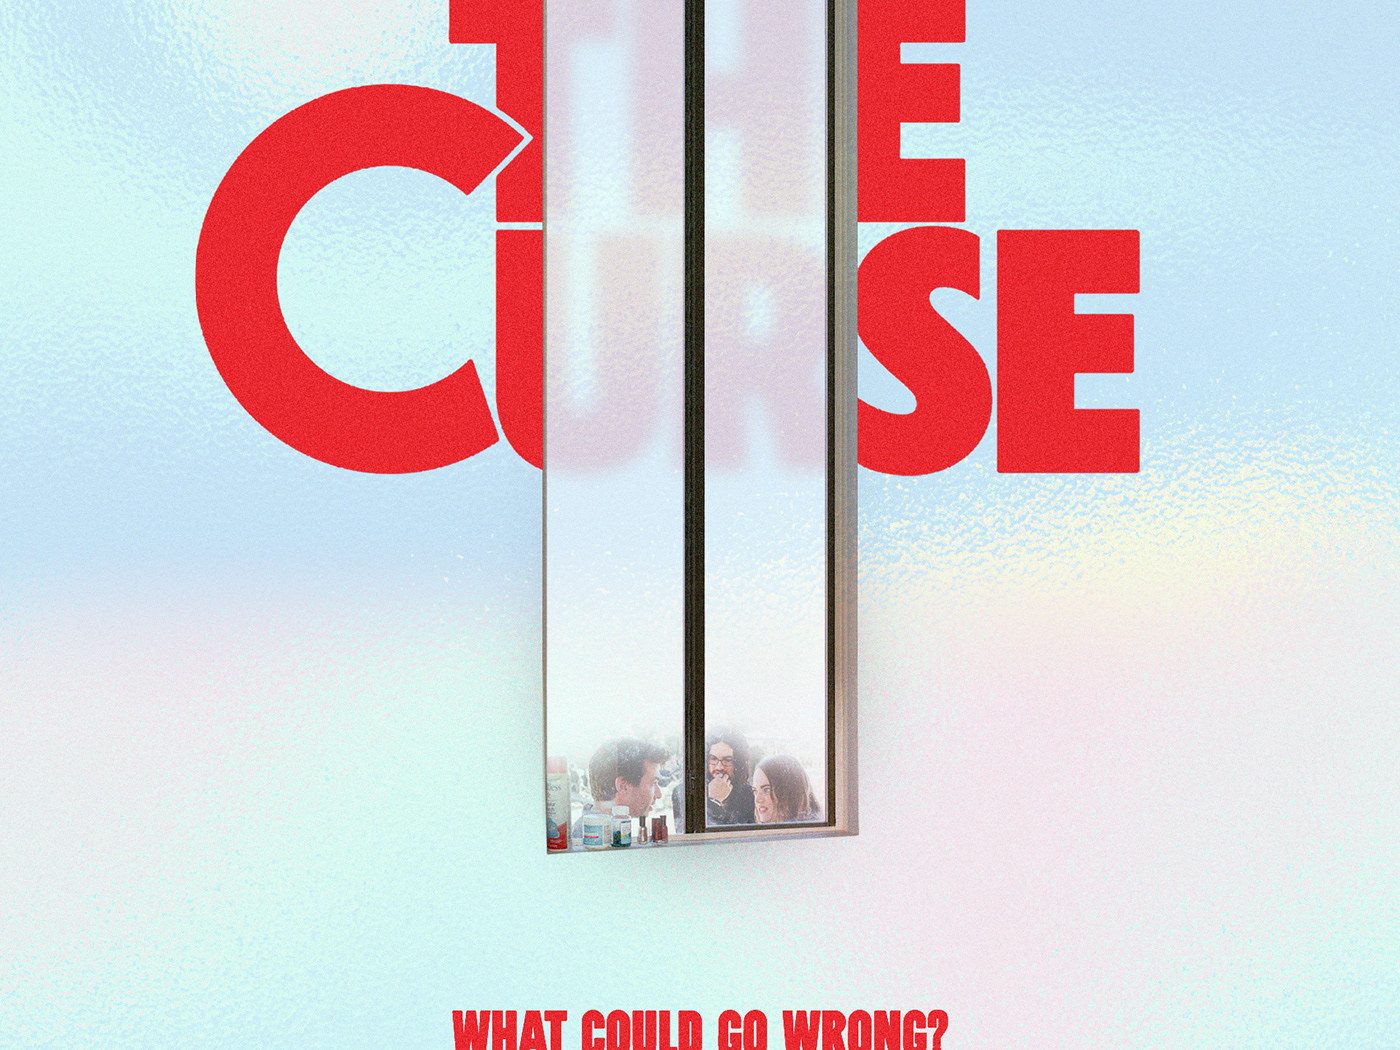 Nathan Fielder & Benny Safdie’s ‘The Curse’